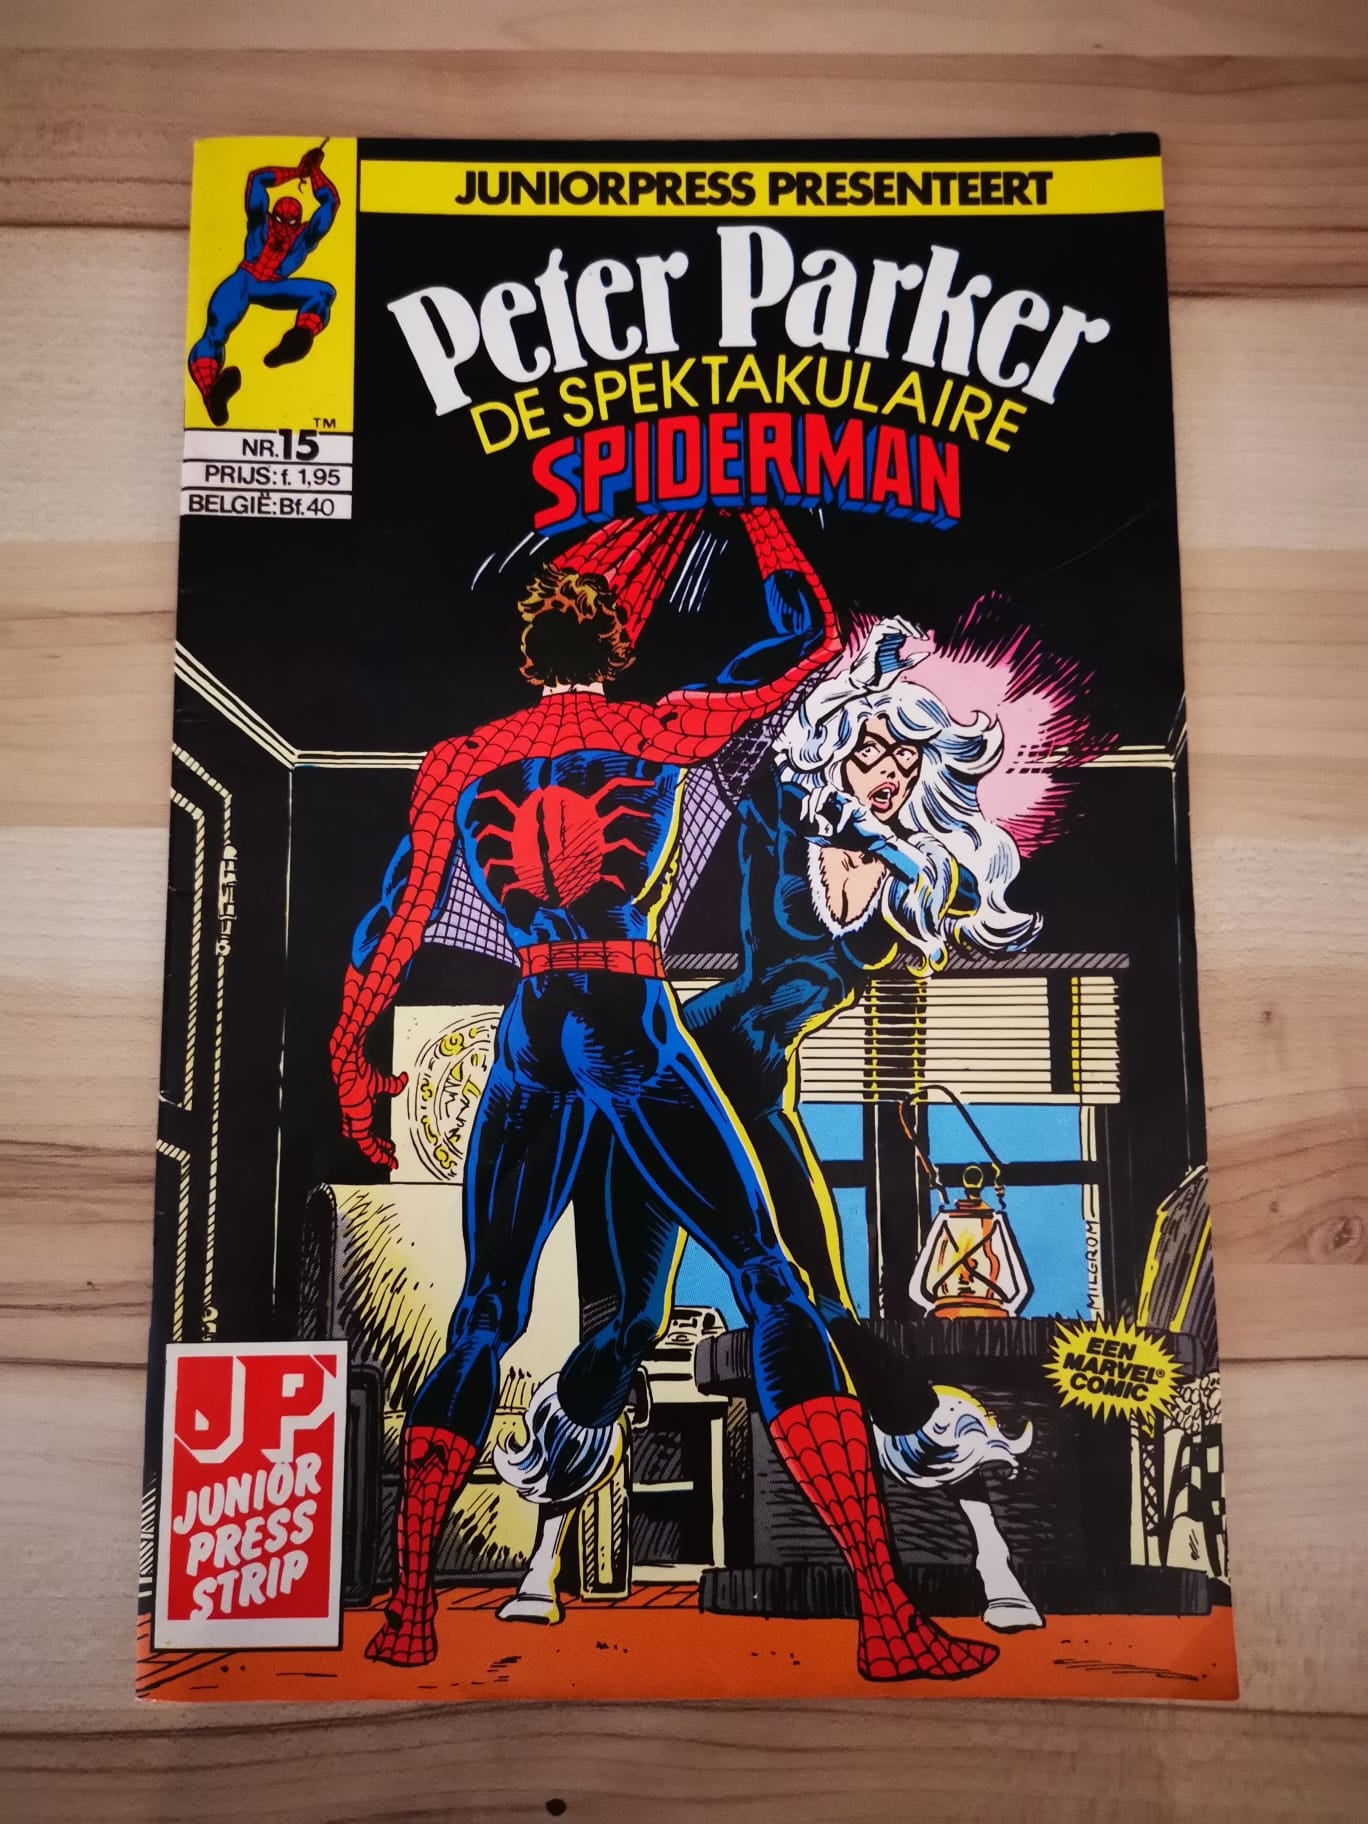 Peter Parker De spektakulaire spiderman #15